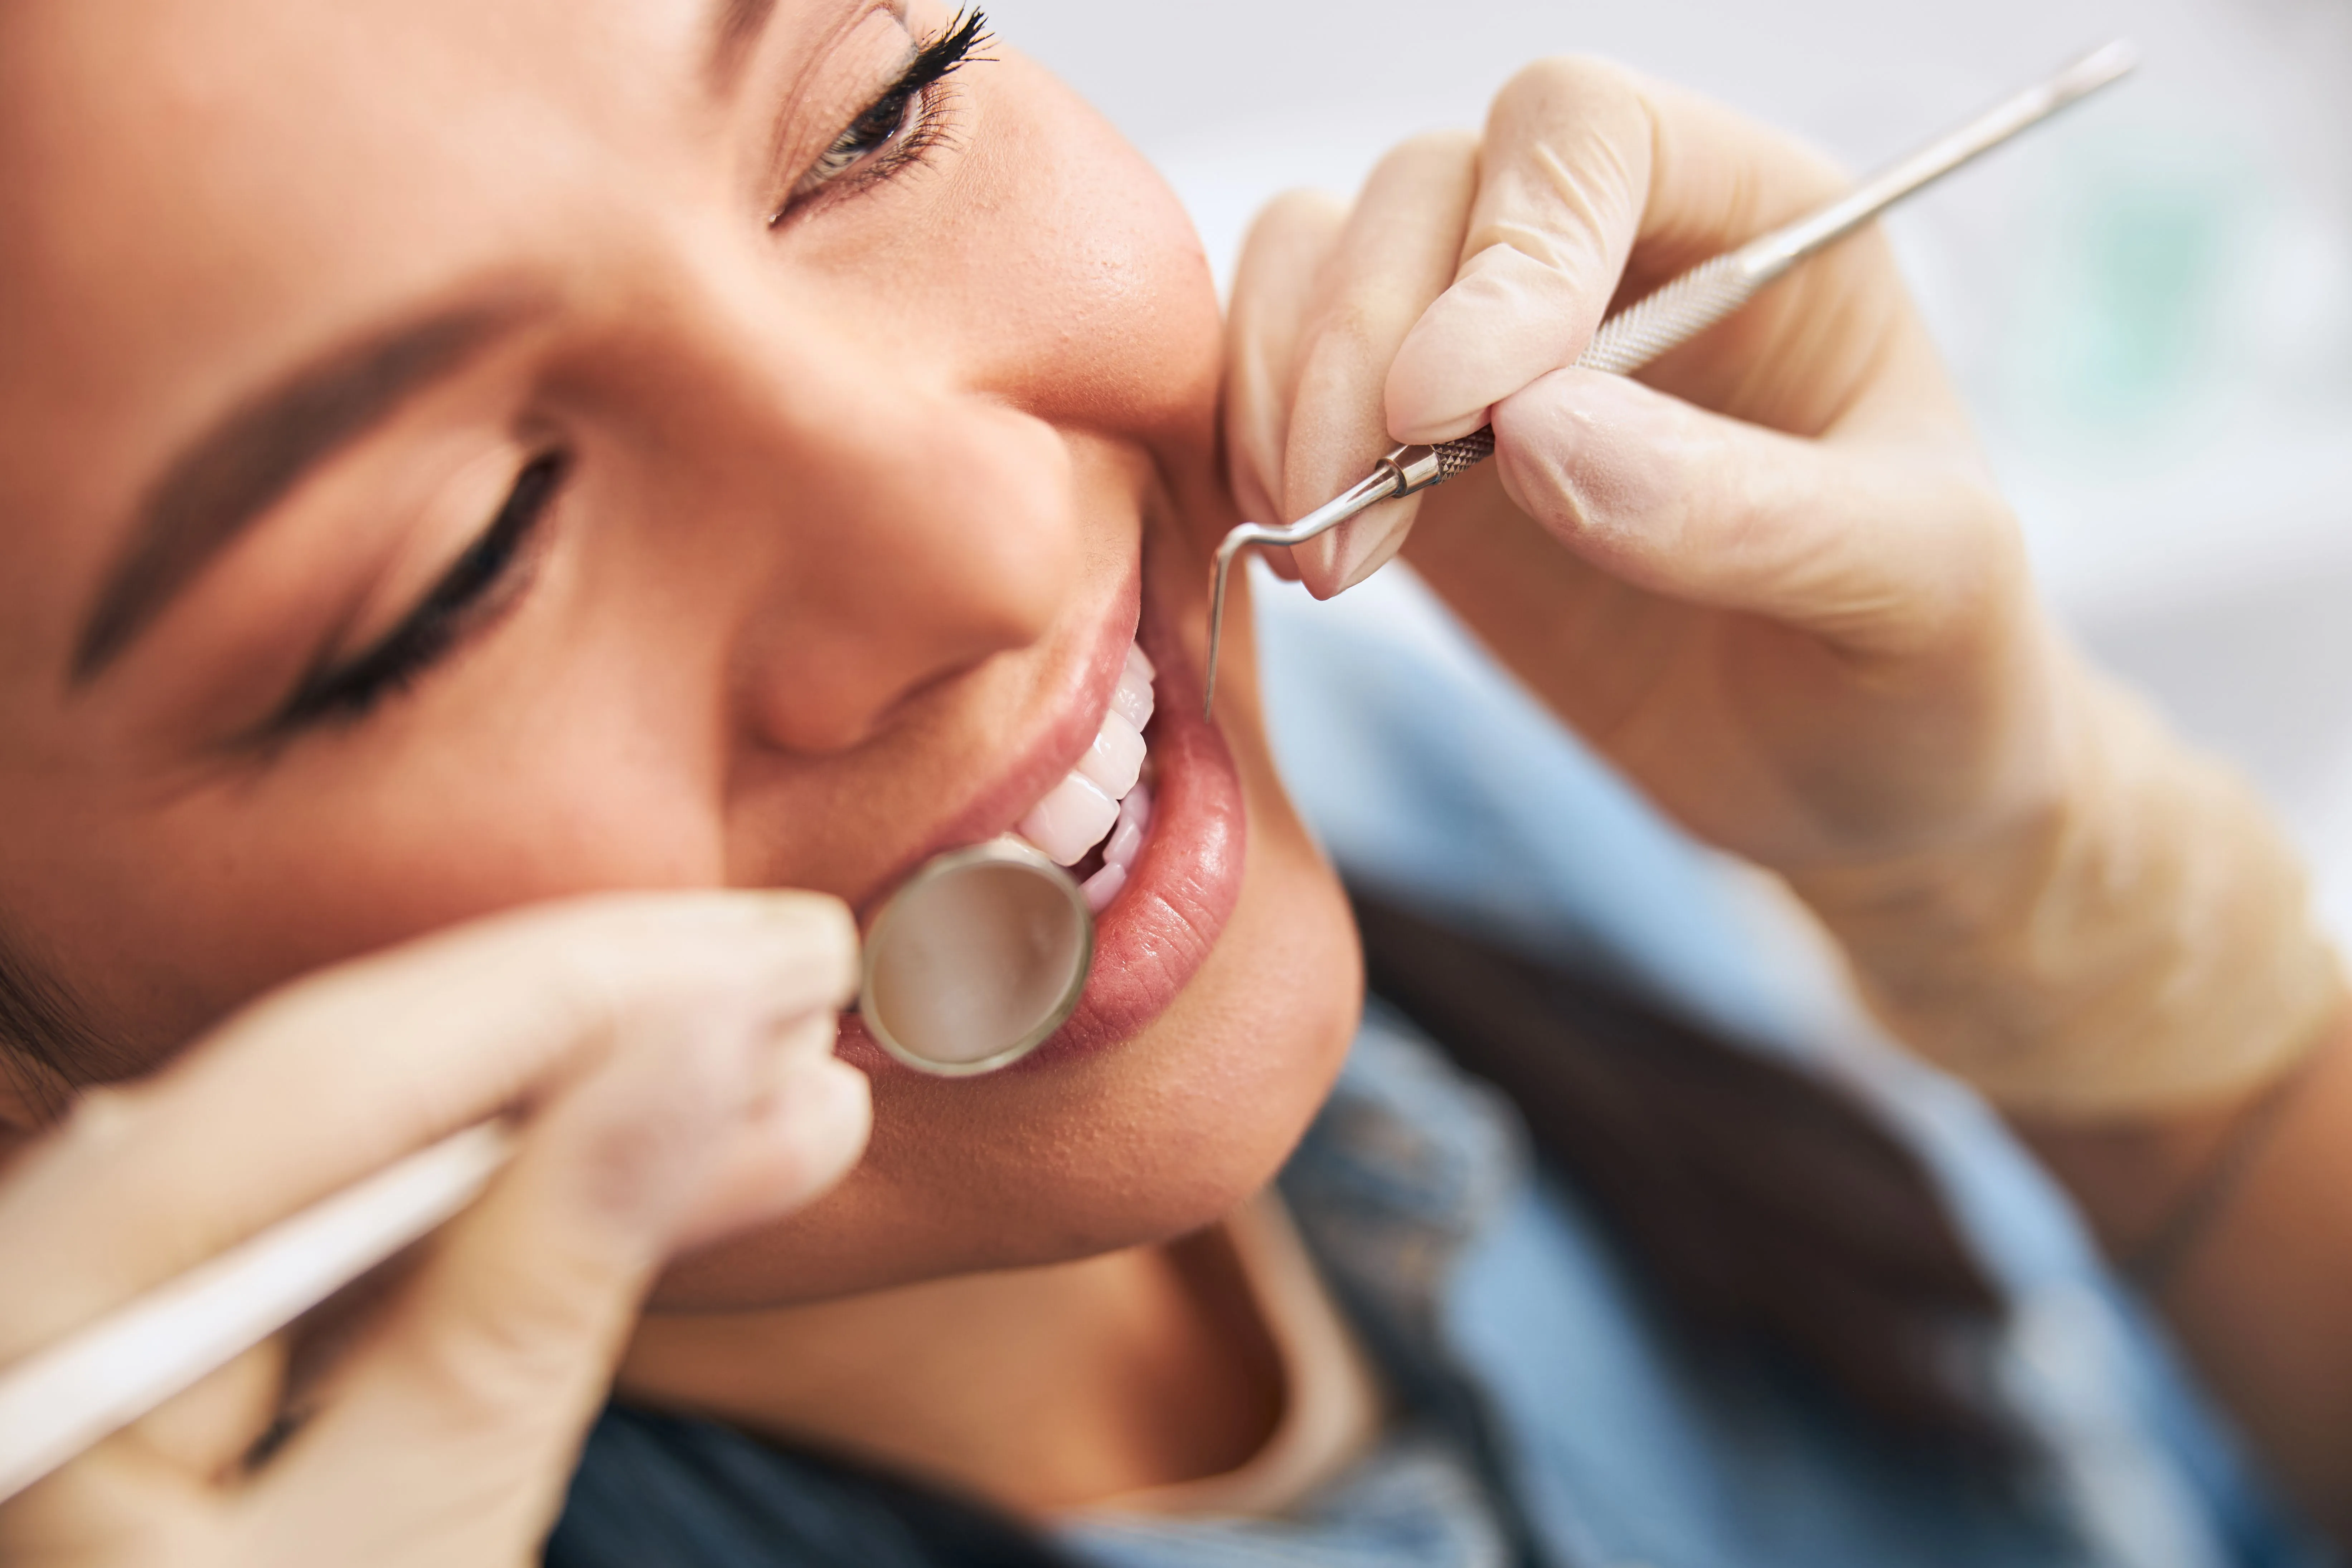 Routine dental checkups